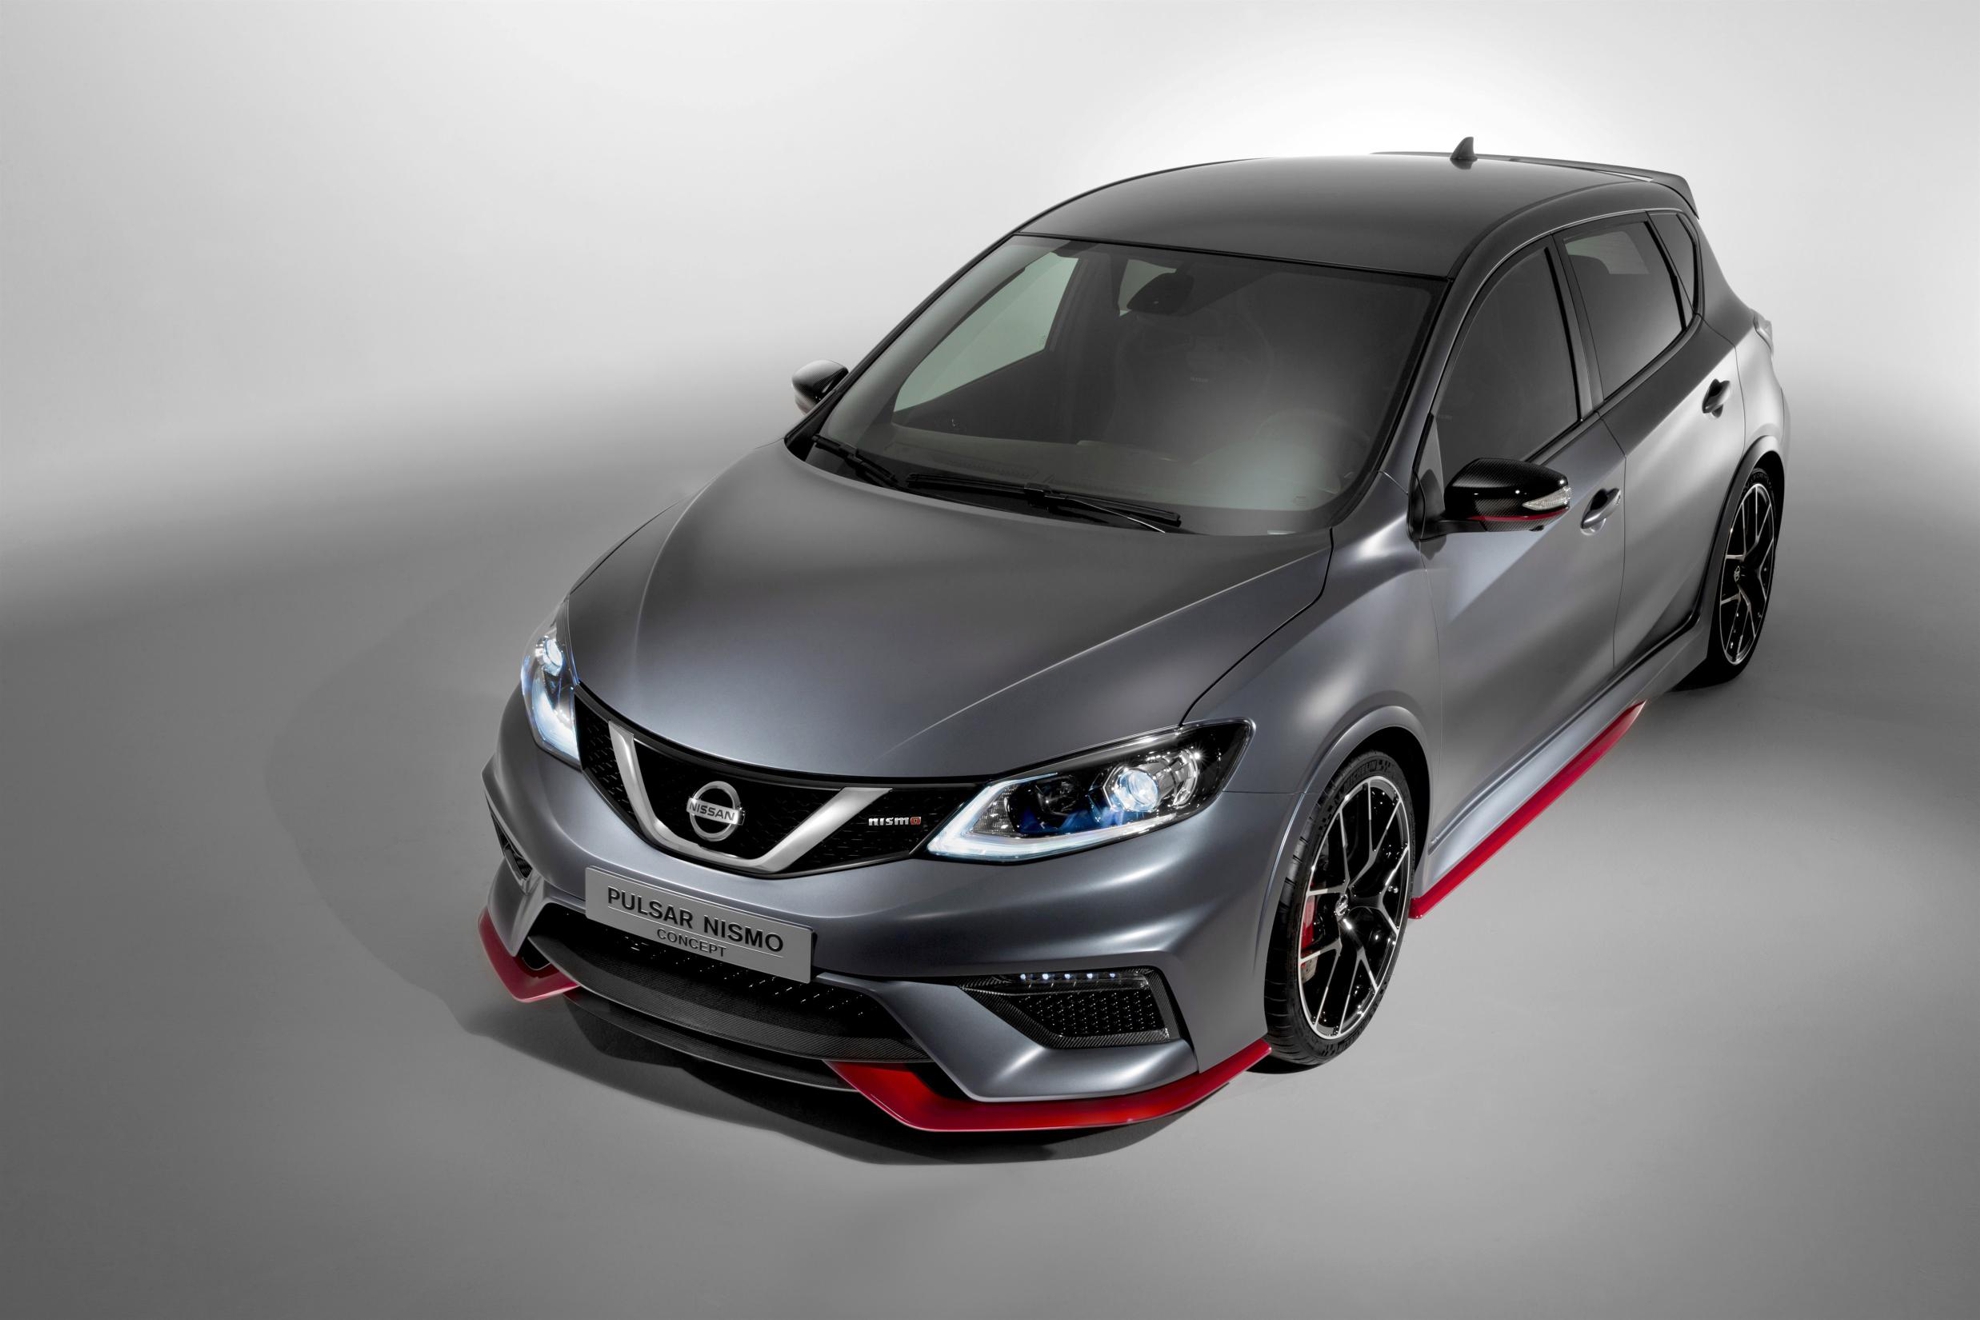 Paris Motor Show 2014 – Nissan